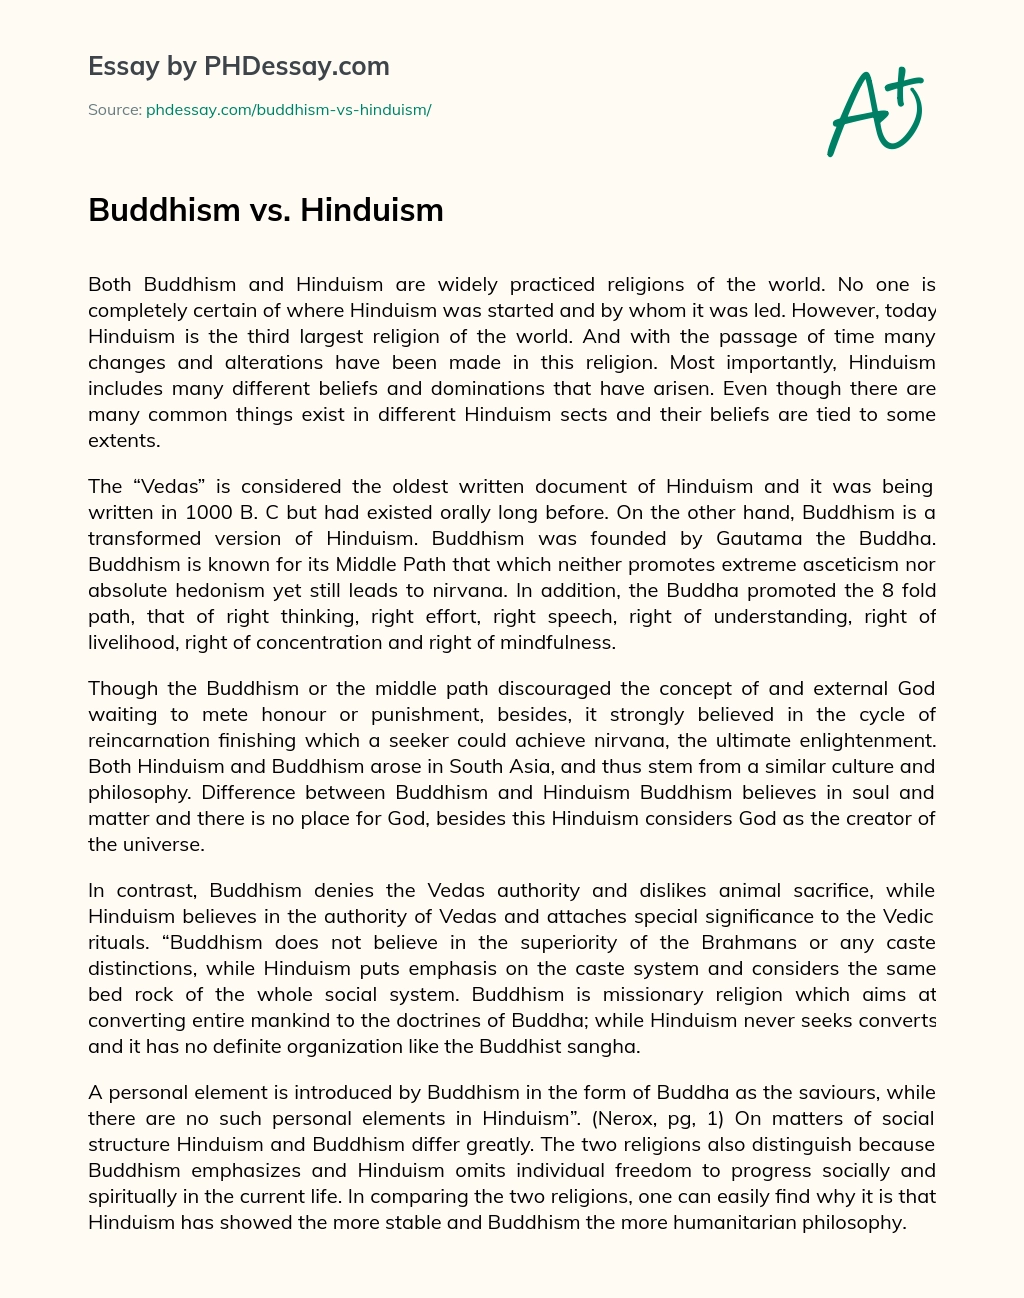 Buddhism vs. Hinduism essay